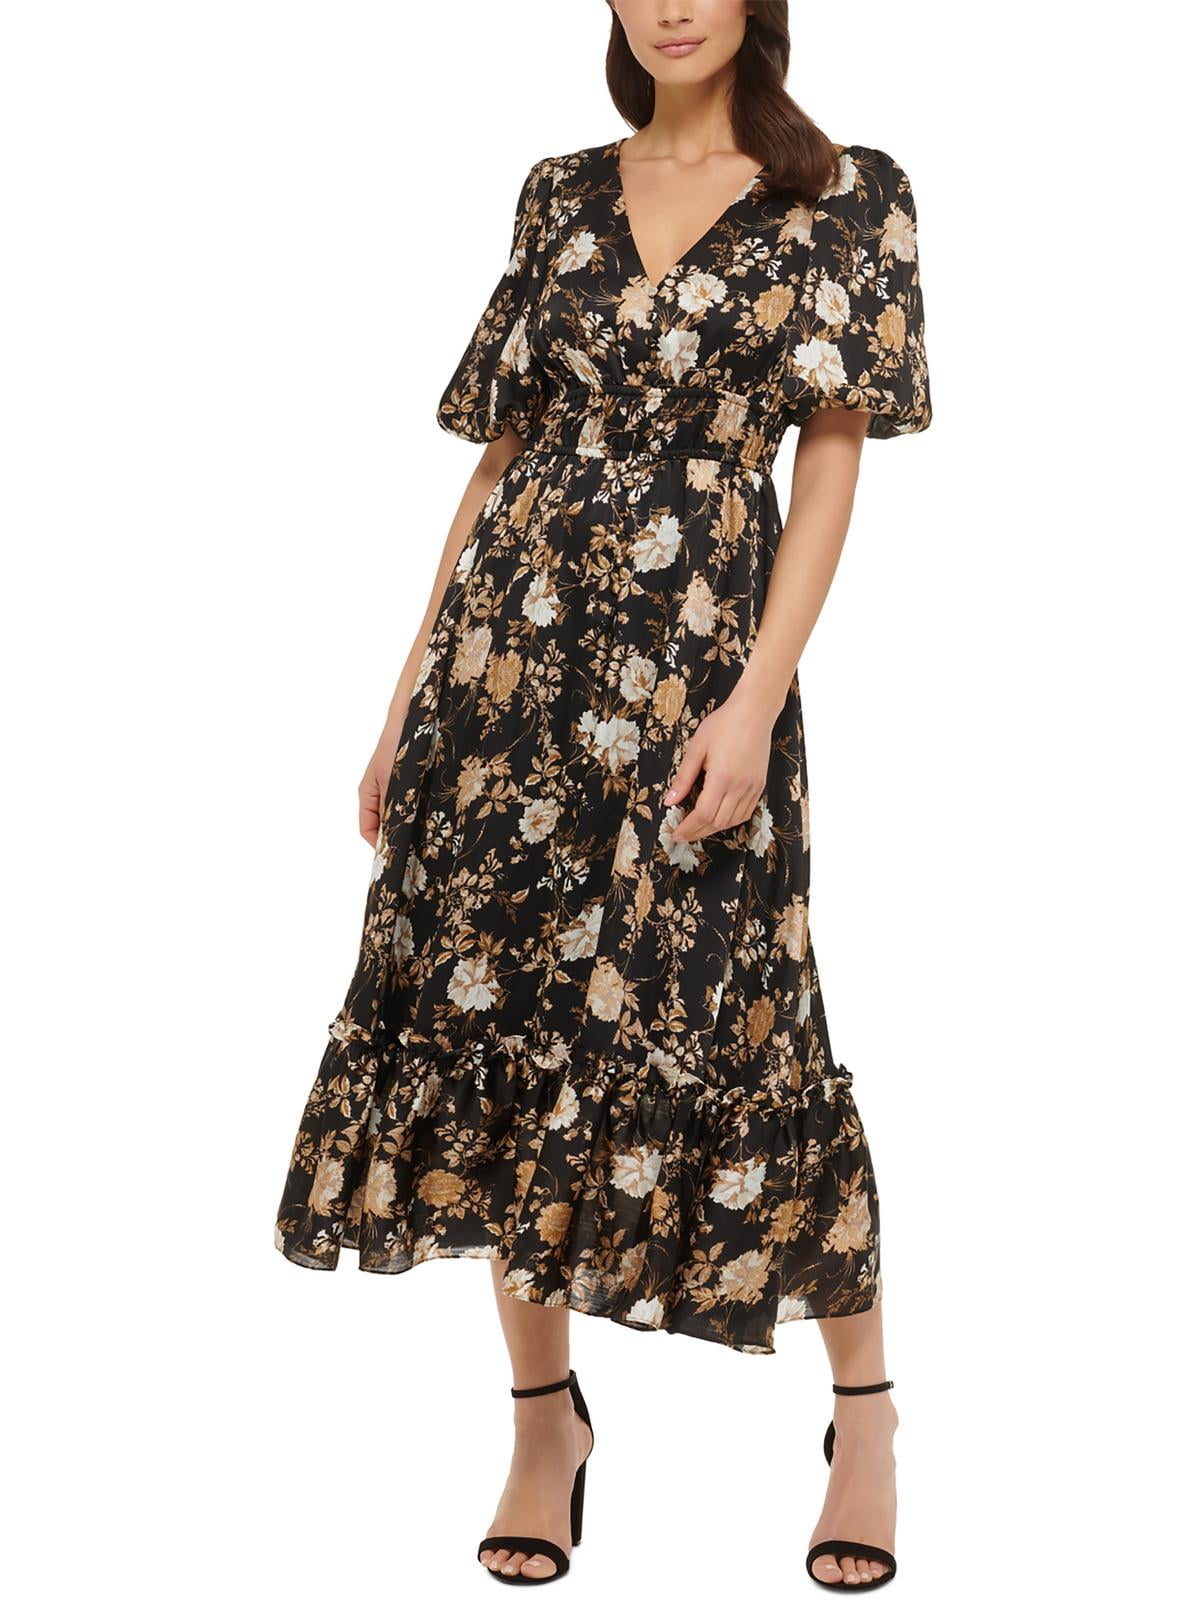 Kensie Dresses Womens Floral Bell Sleeve Fit & Flare Dress - Walmart.com